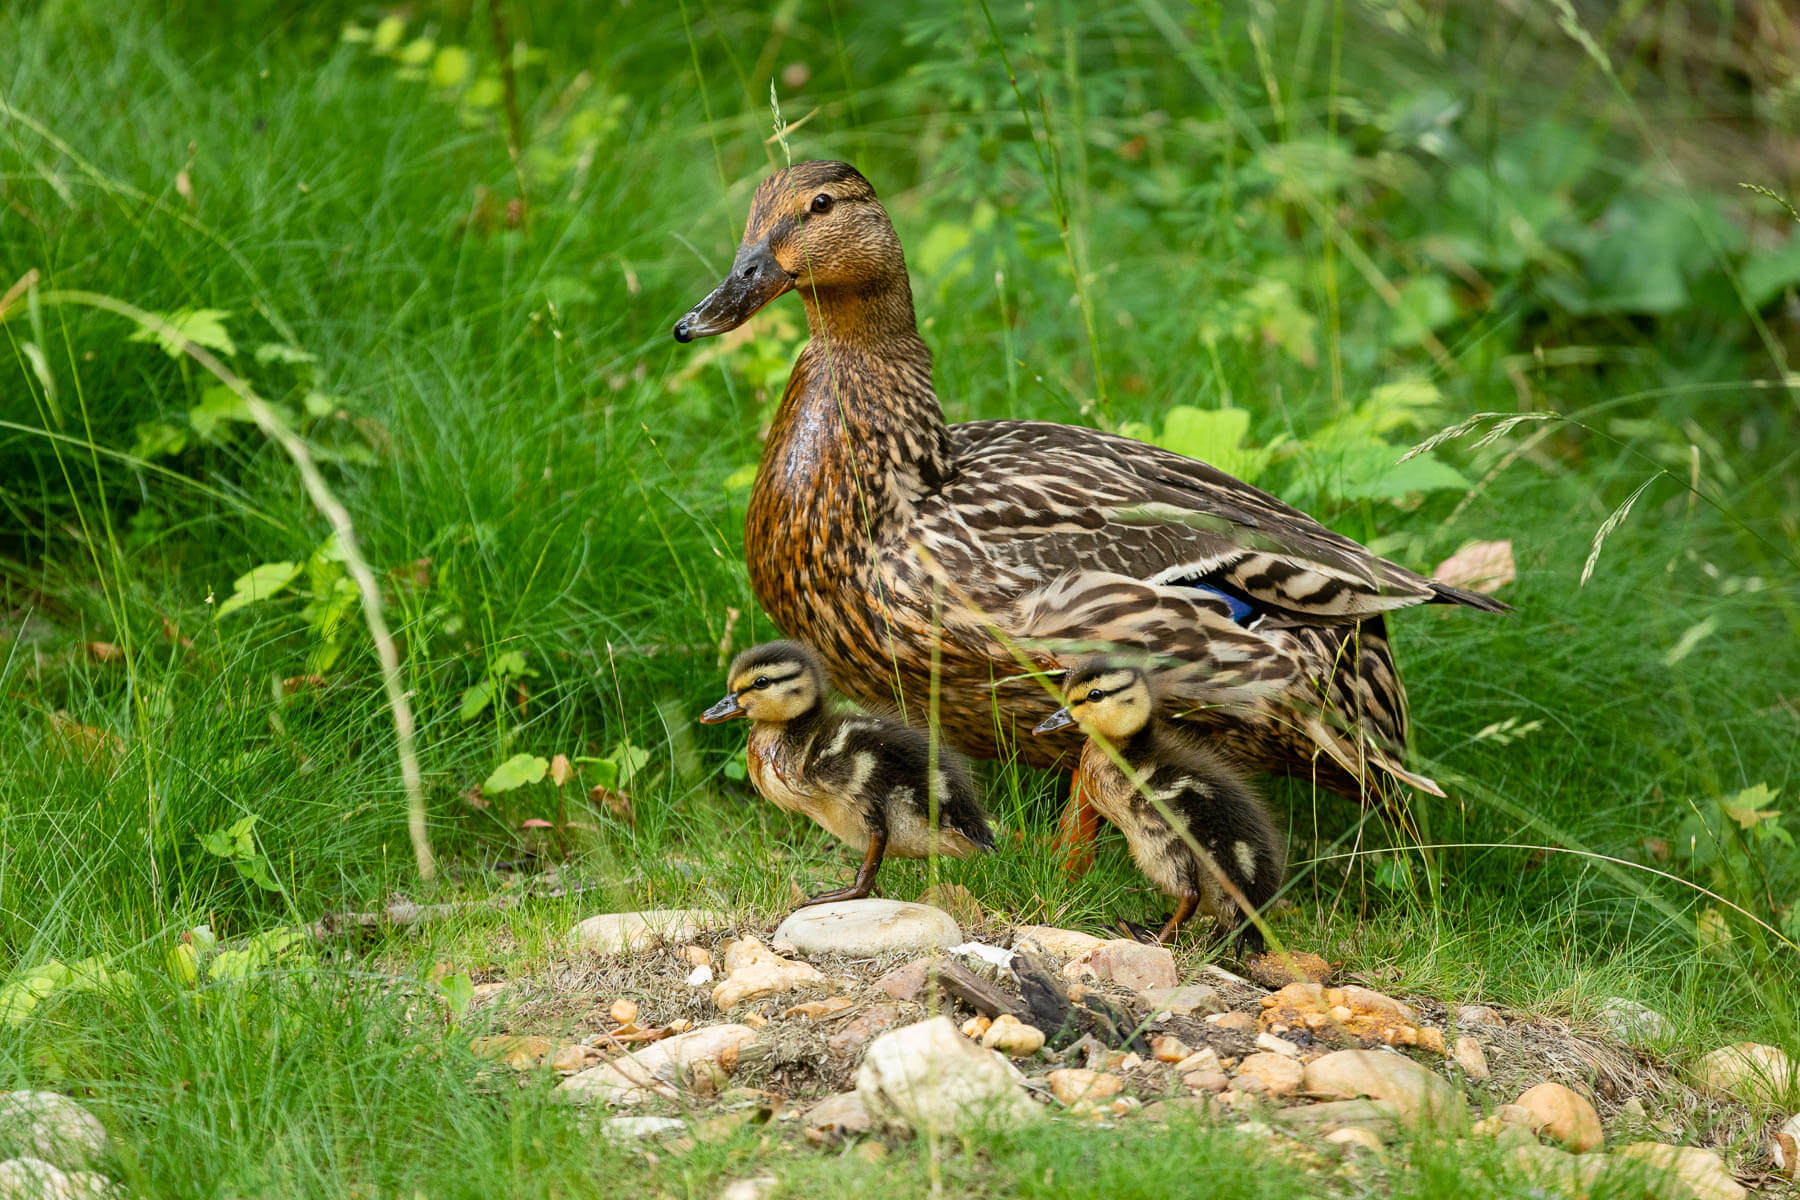 Mallard ducks and ducklings forage along Bowen's Branch.